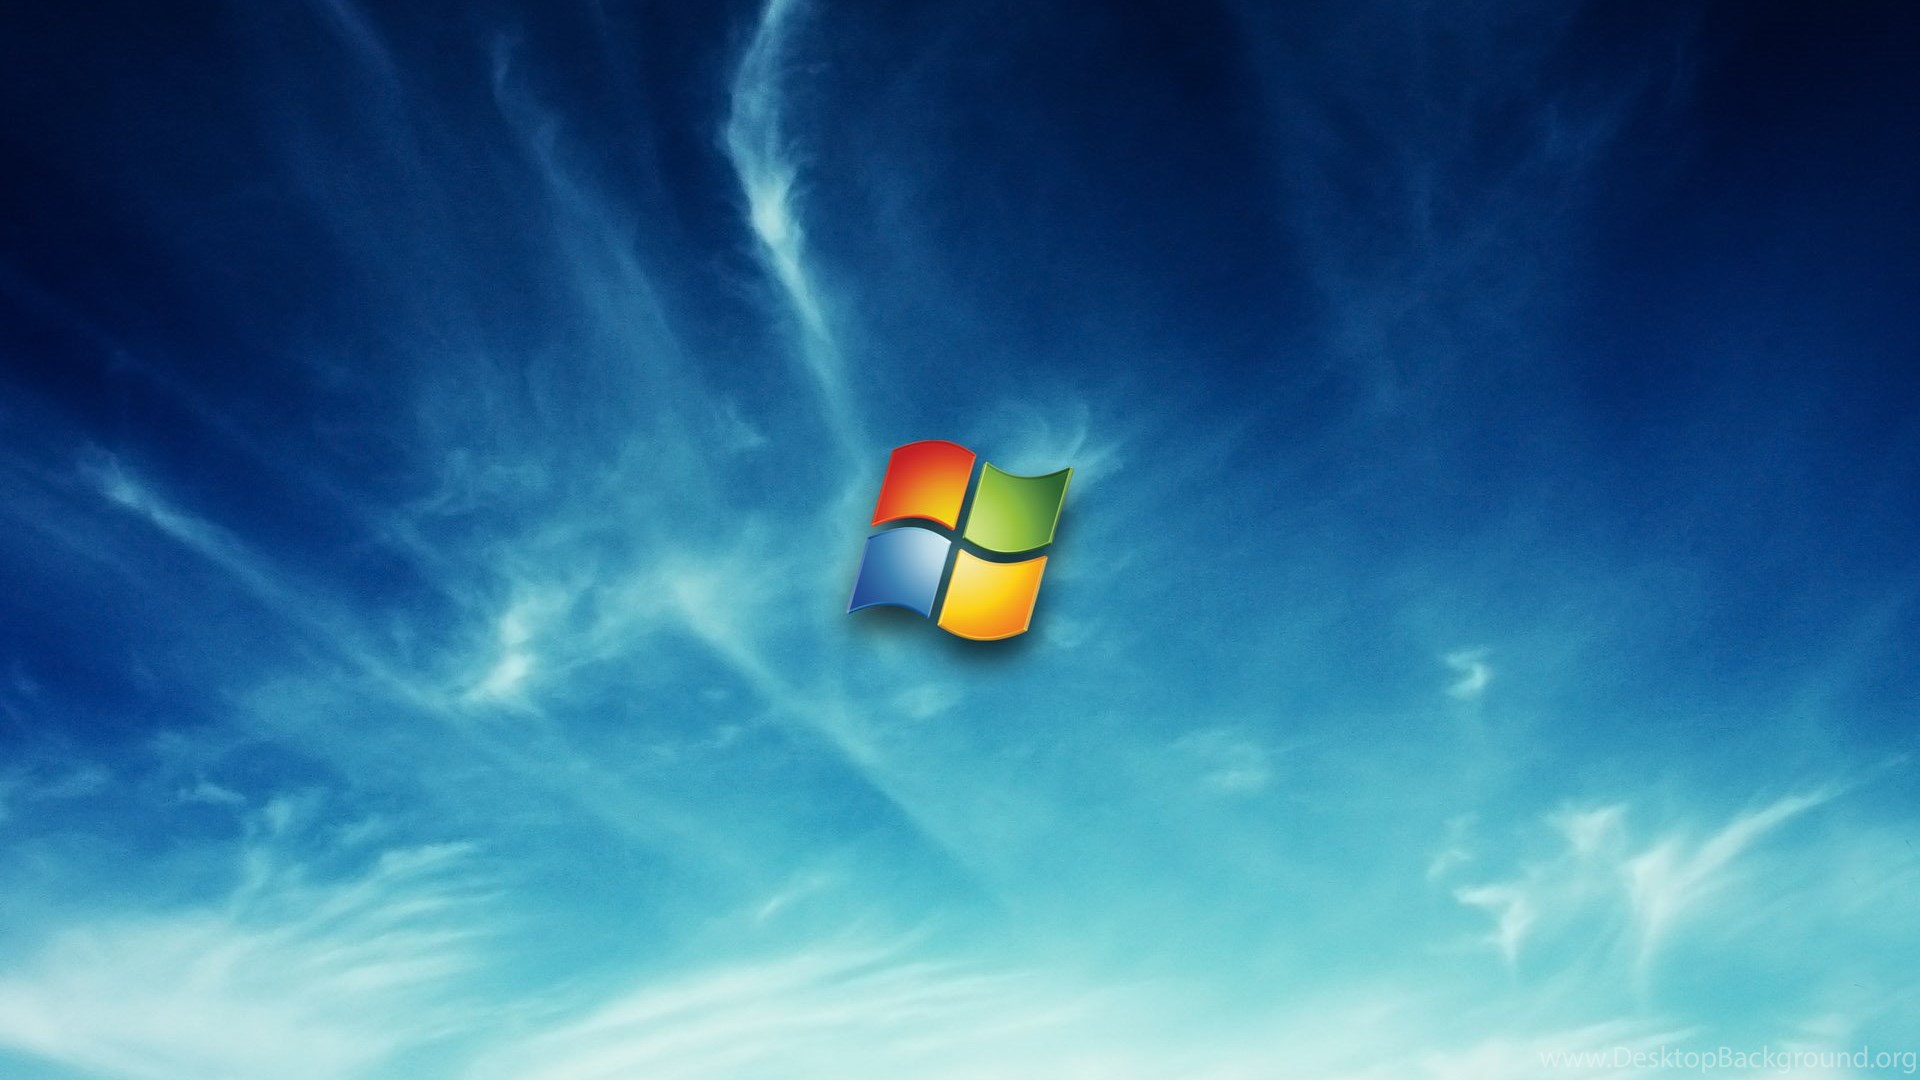 Windows 95 Wallpapers Hd Wallpapers Desktop Background